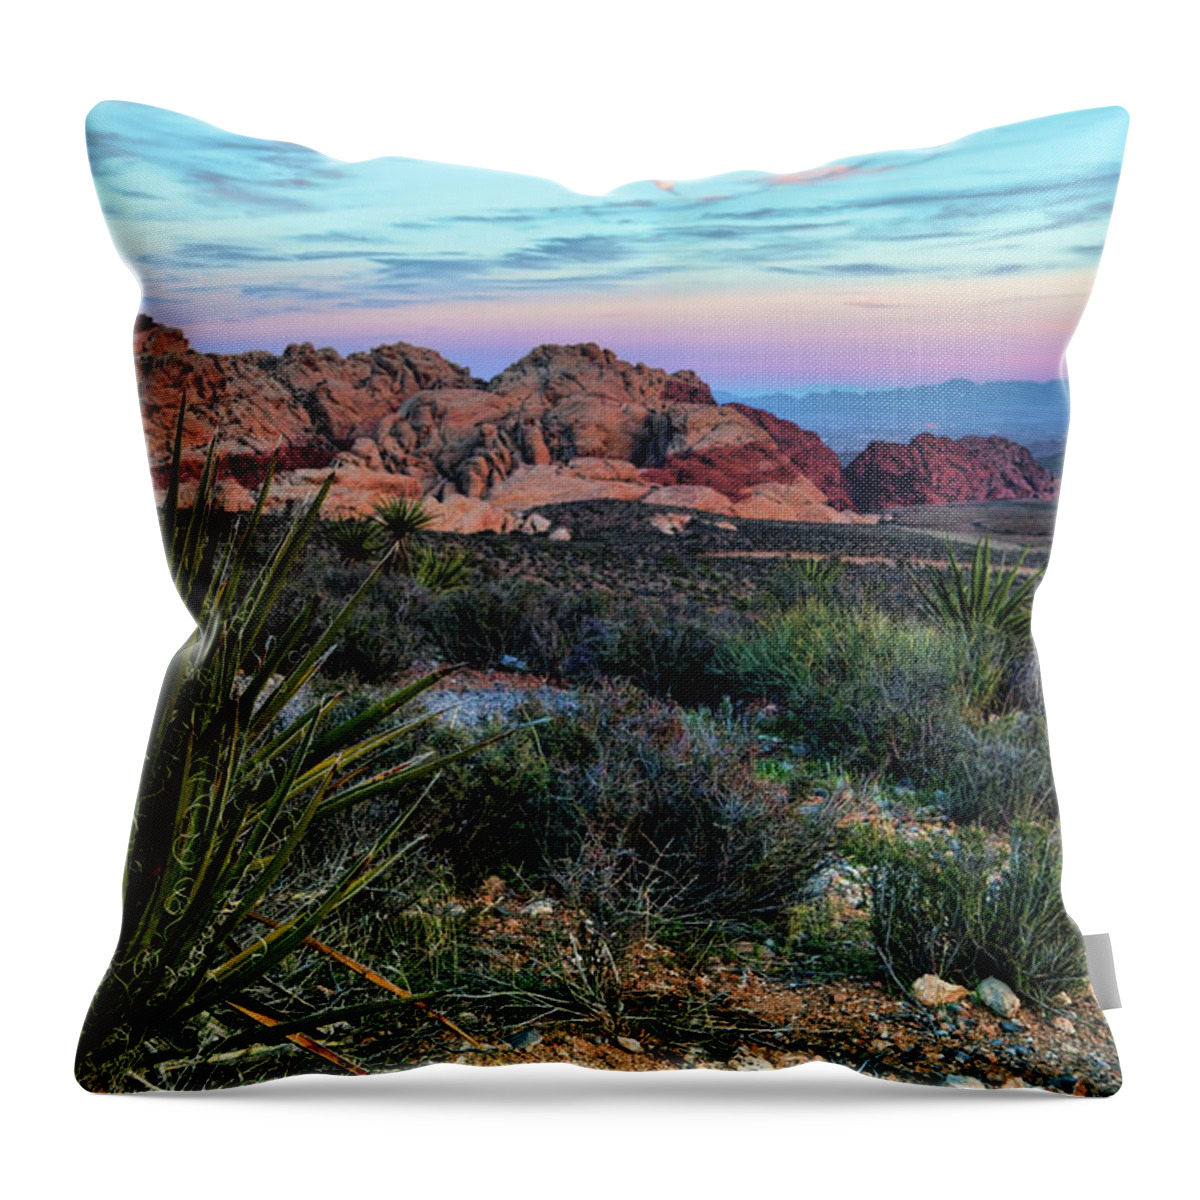 Nevada Throw Pillow featuring the photograph Red Rock Sunset II by Rick Berk